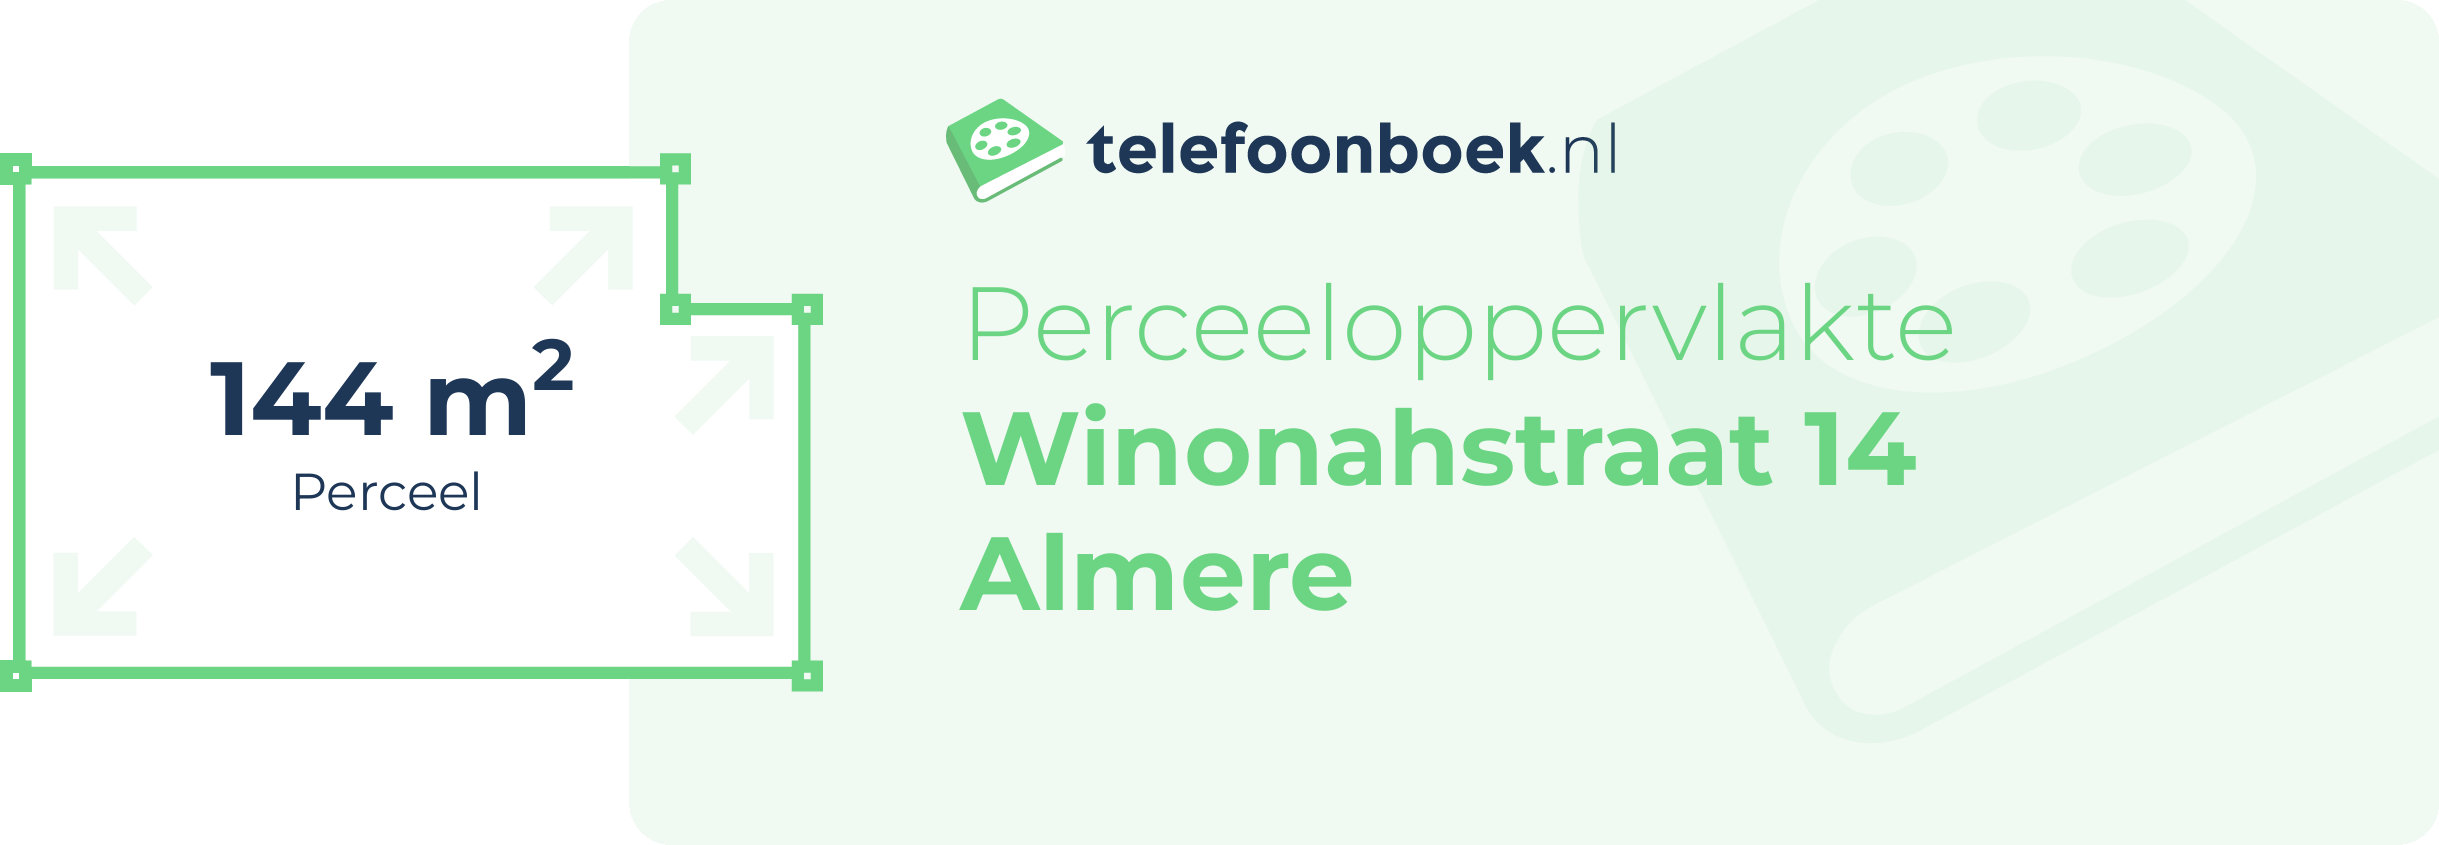 Perceeloppervlakte Winonahstraat 14 Almere